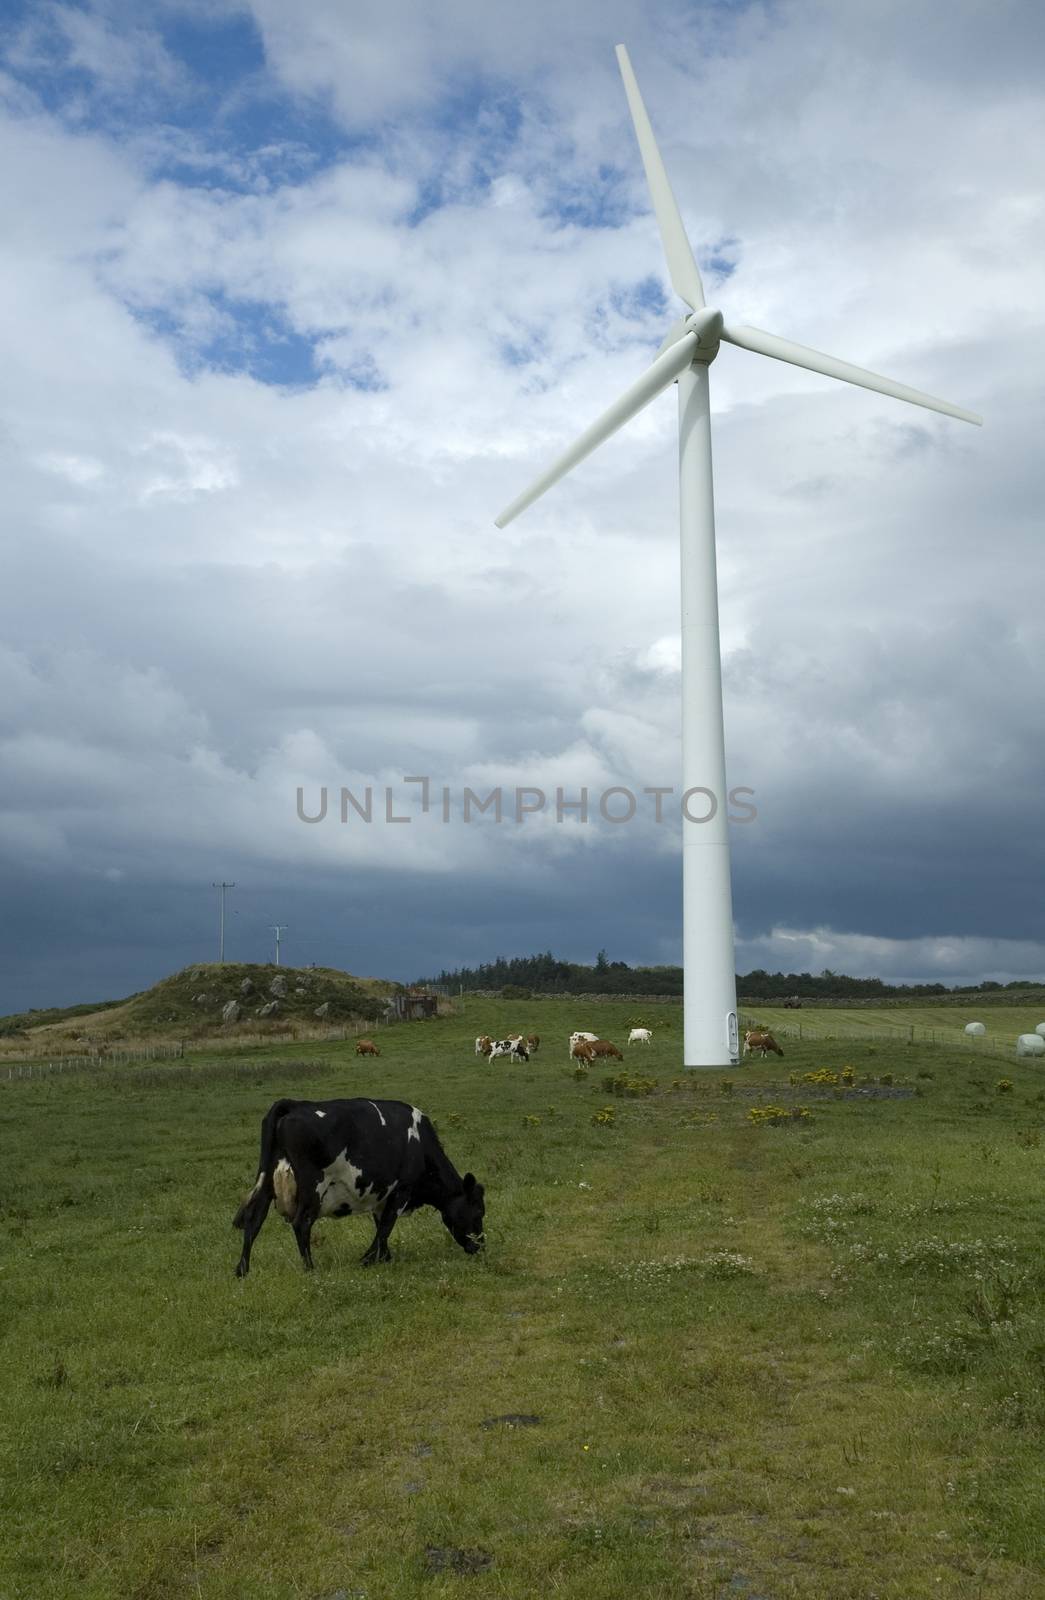 A wind turbine in a cow field